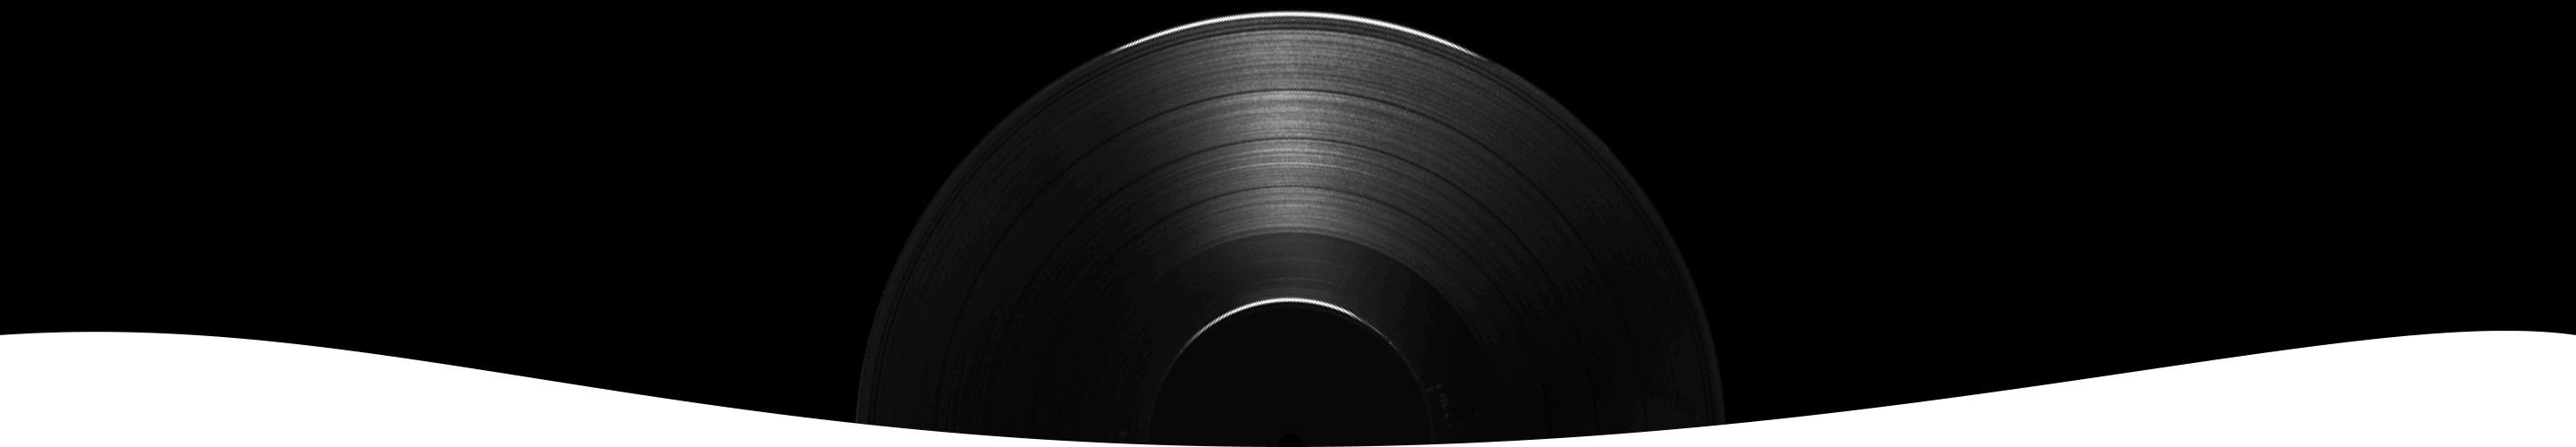 huge black vinyl on a dark grey background